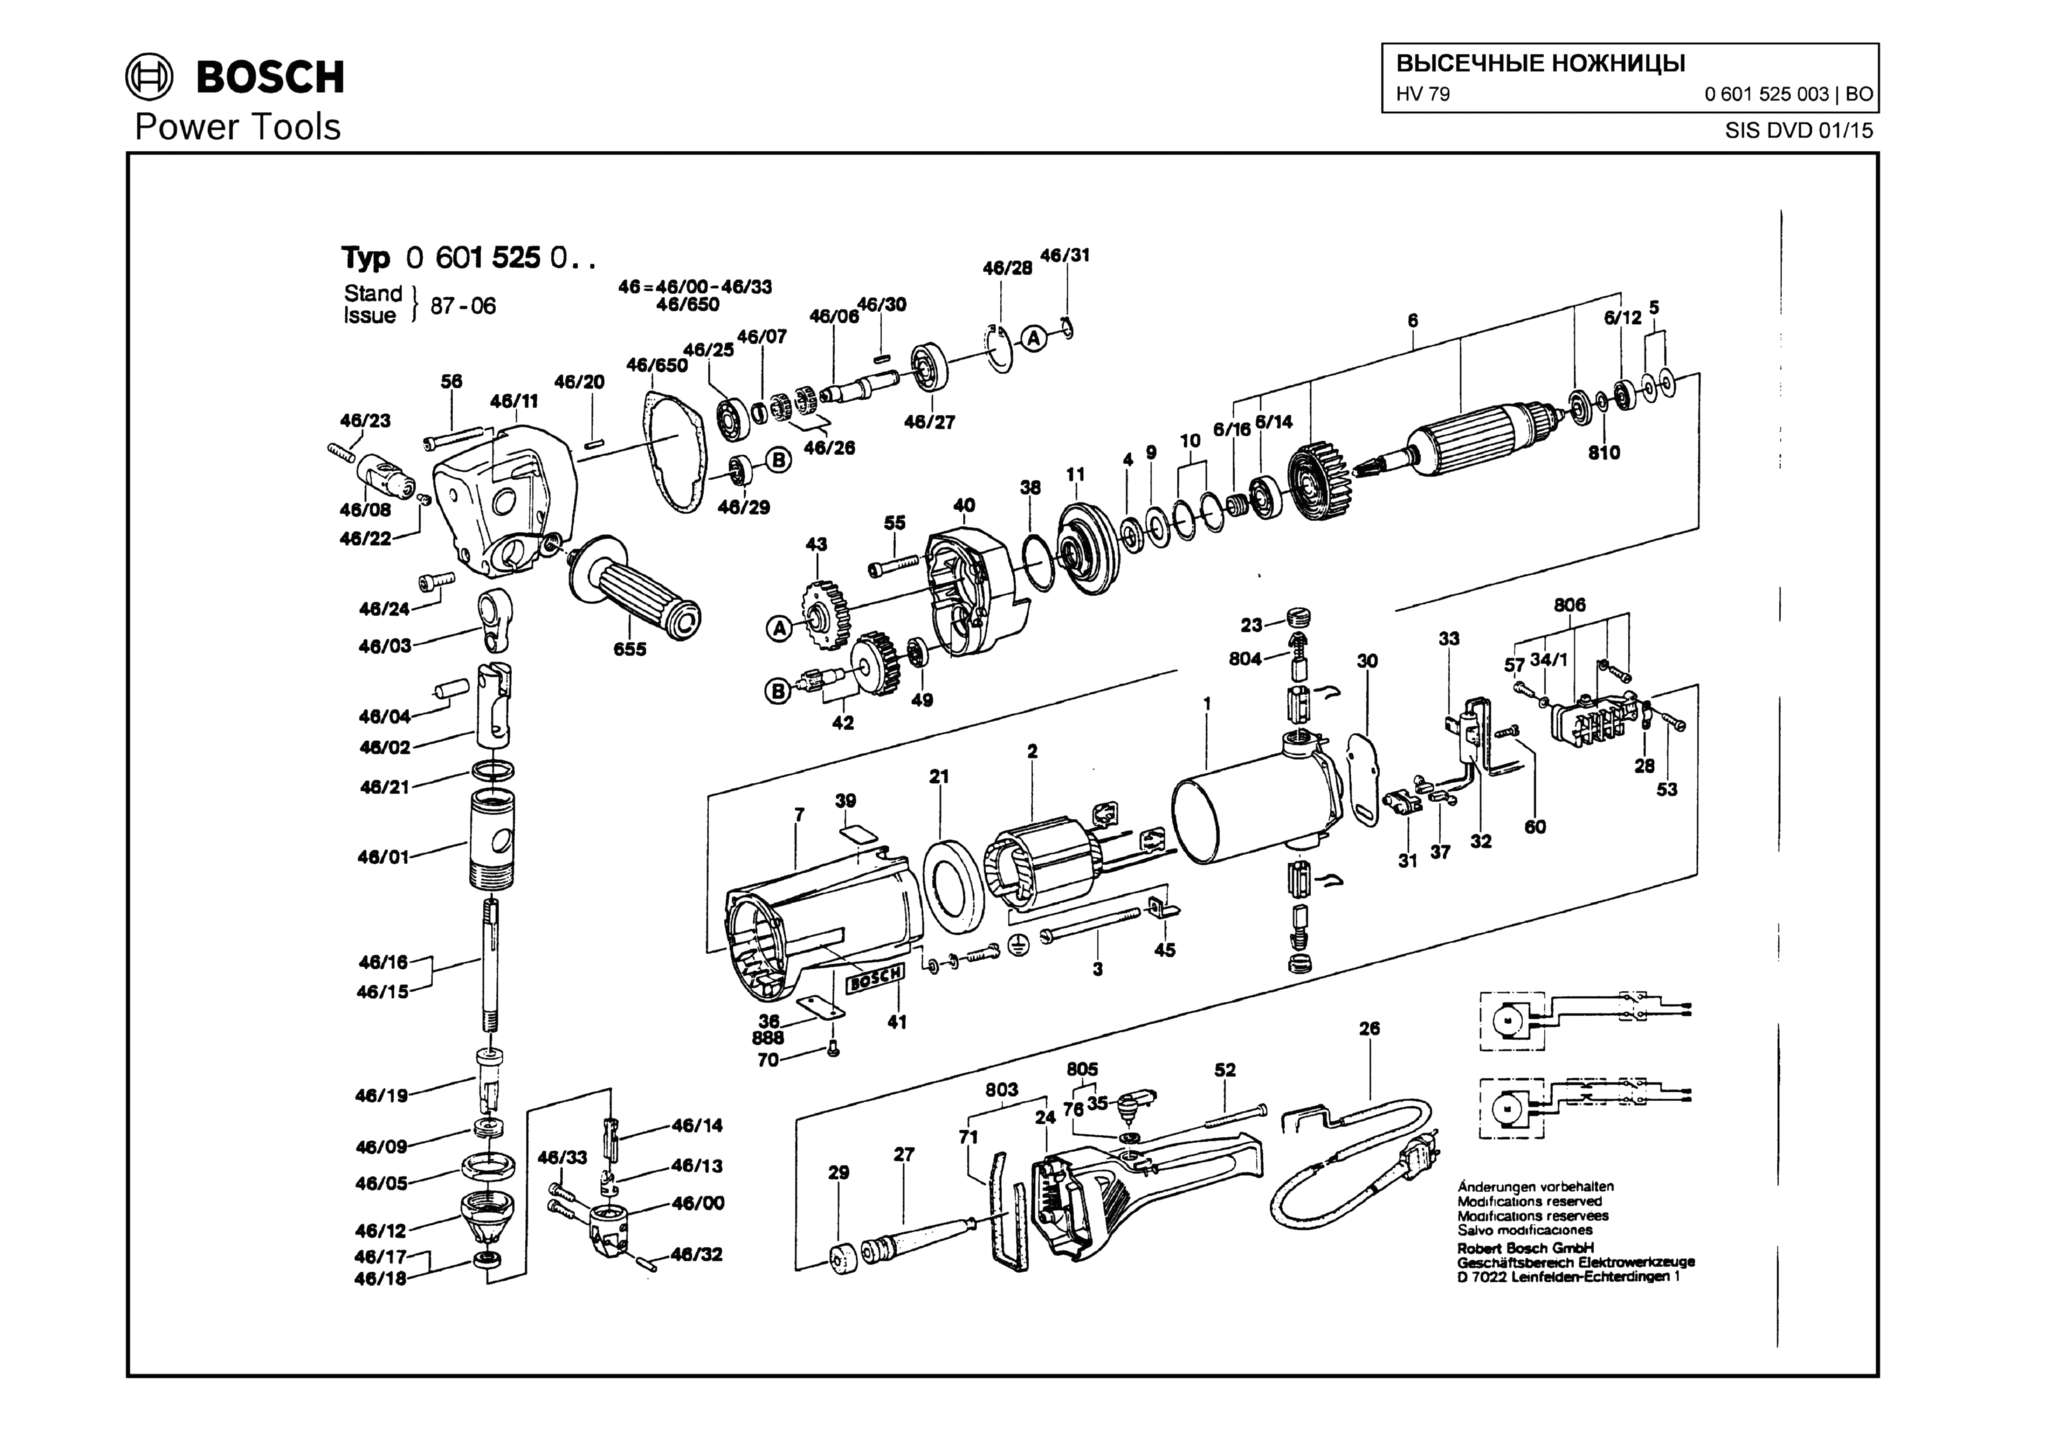 Запчасти, схема и деталировка Bosch HV 79 (ТИП 0601525003)